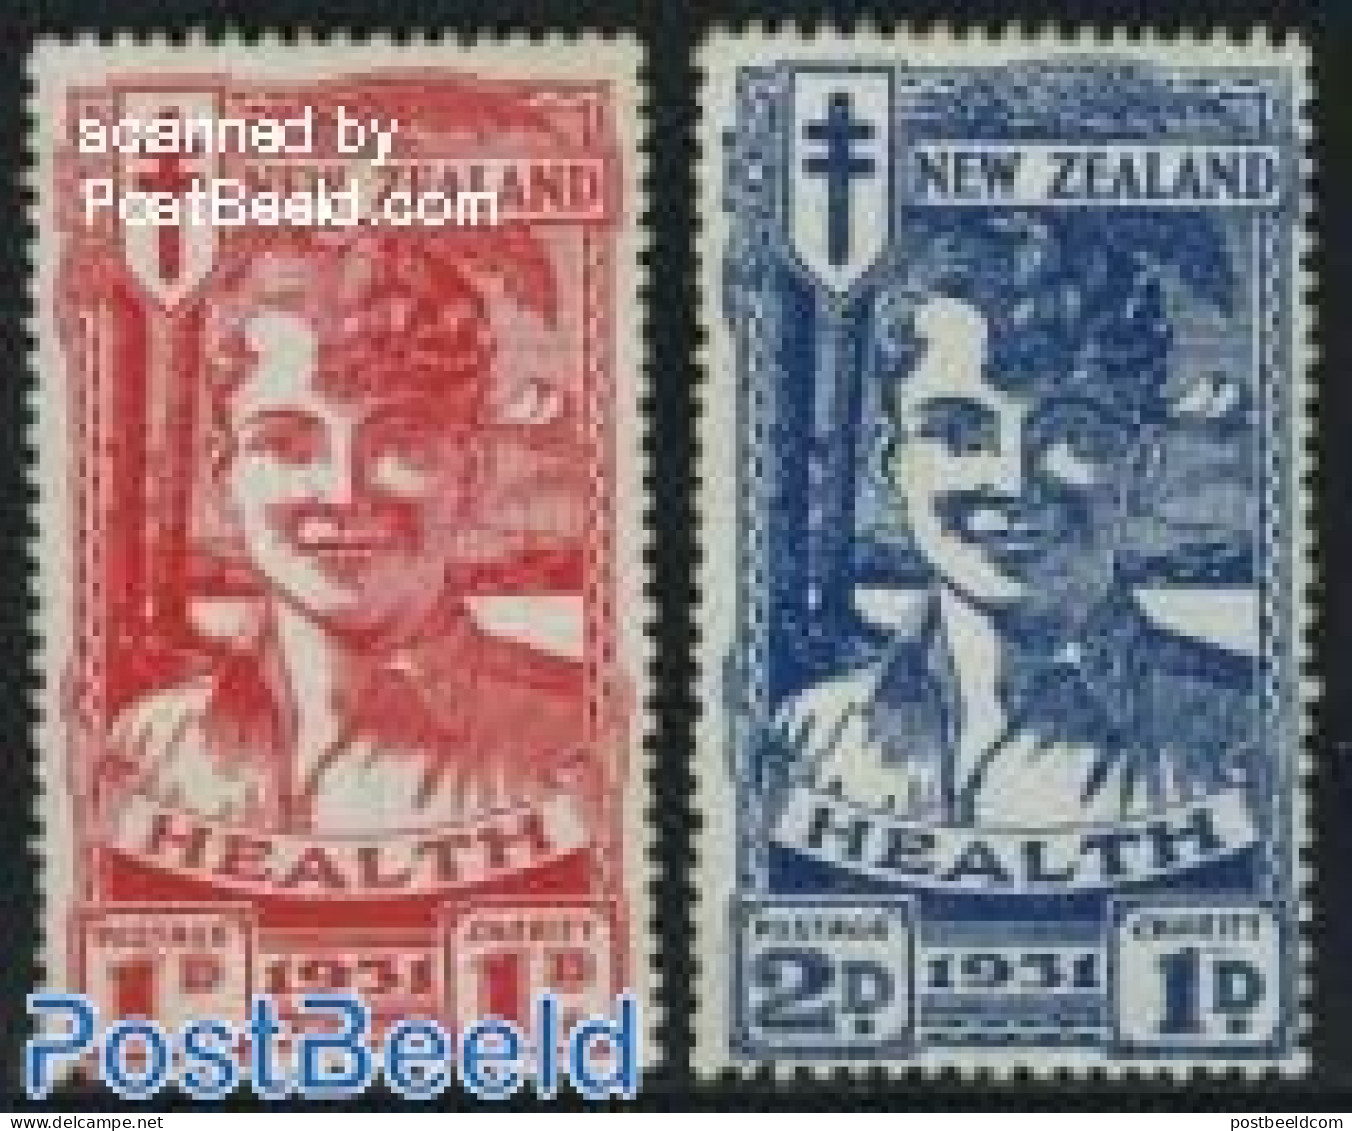 New Zealand 1931 Health 2v, Unused (hinged), Health - Anti Tuberculosis - Health - Neufs